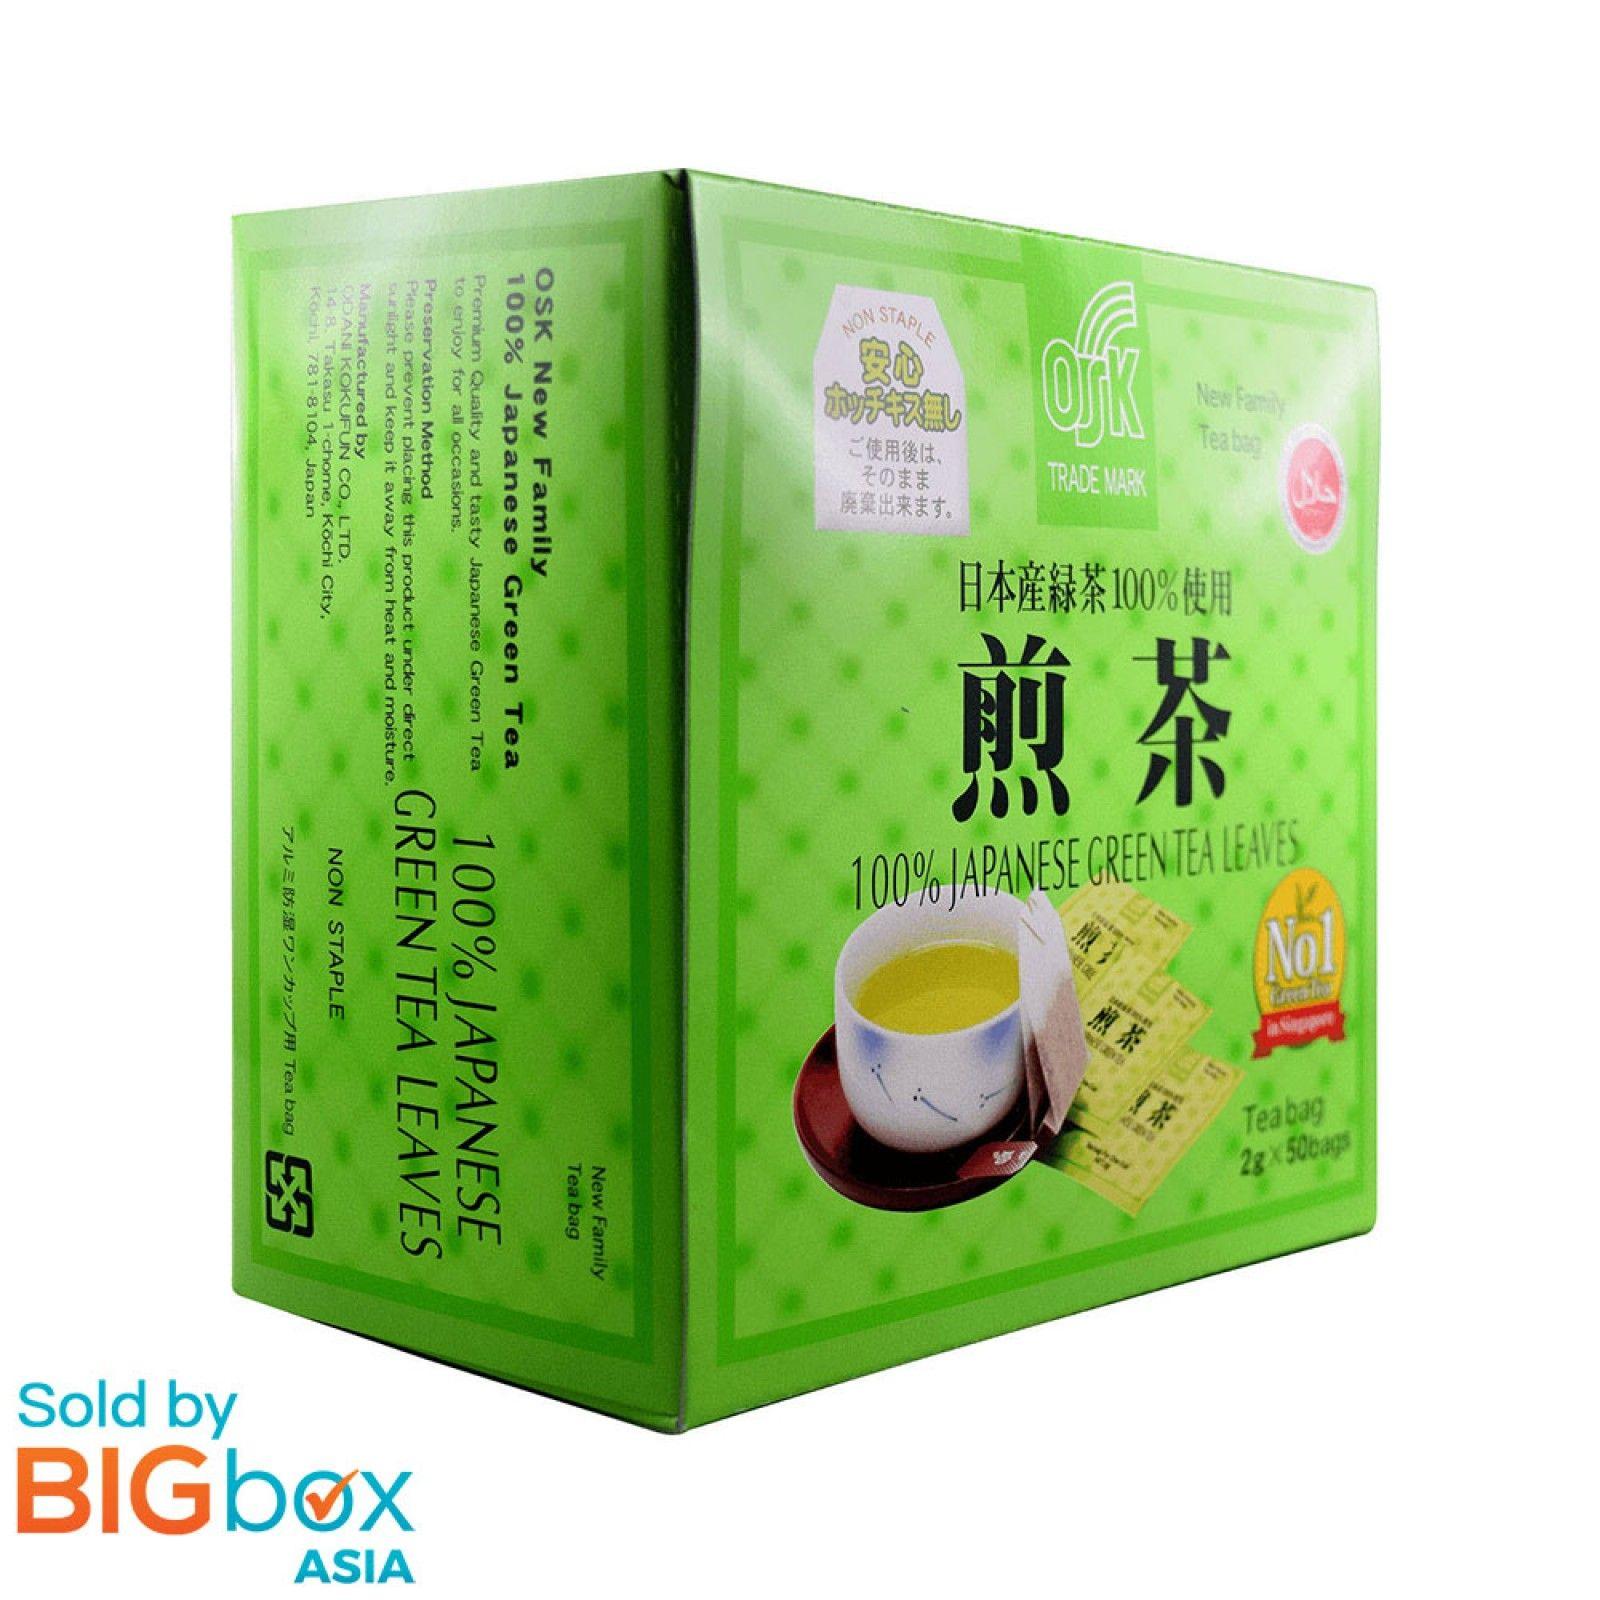 Japan Red Sun Green Tea Logo - HALAL OSK Green Tea 2g x 50packs – Japan